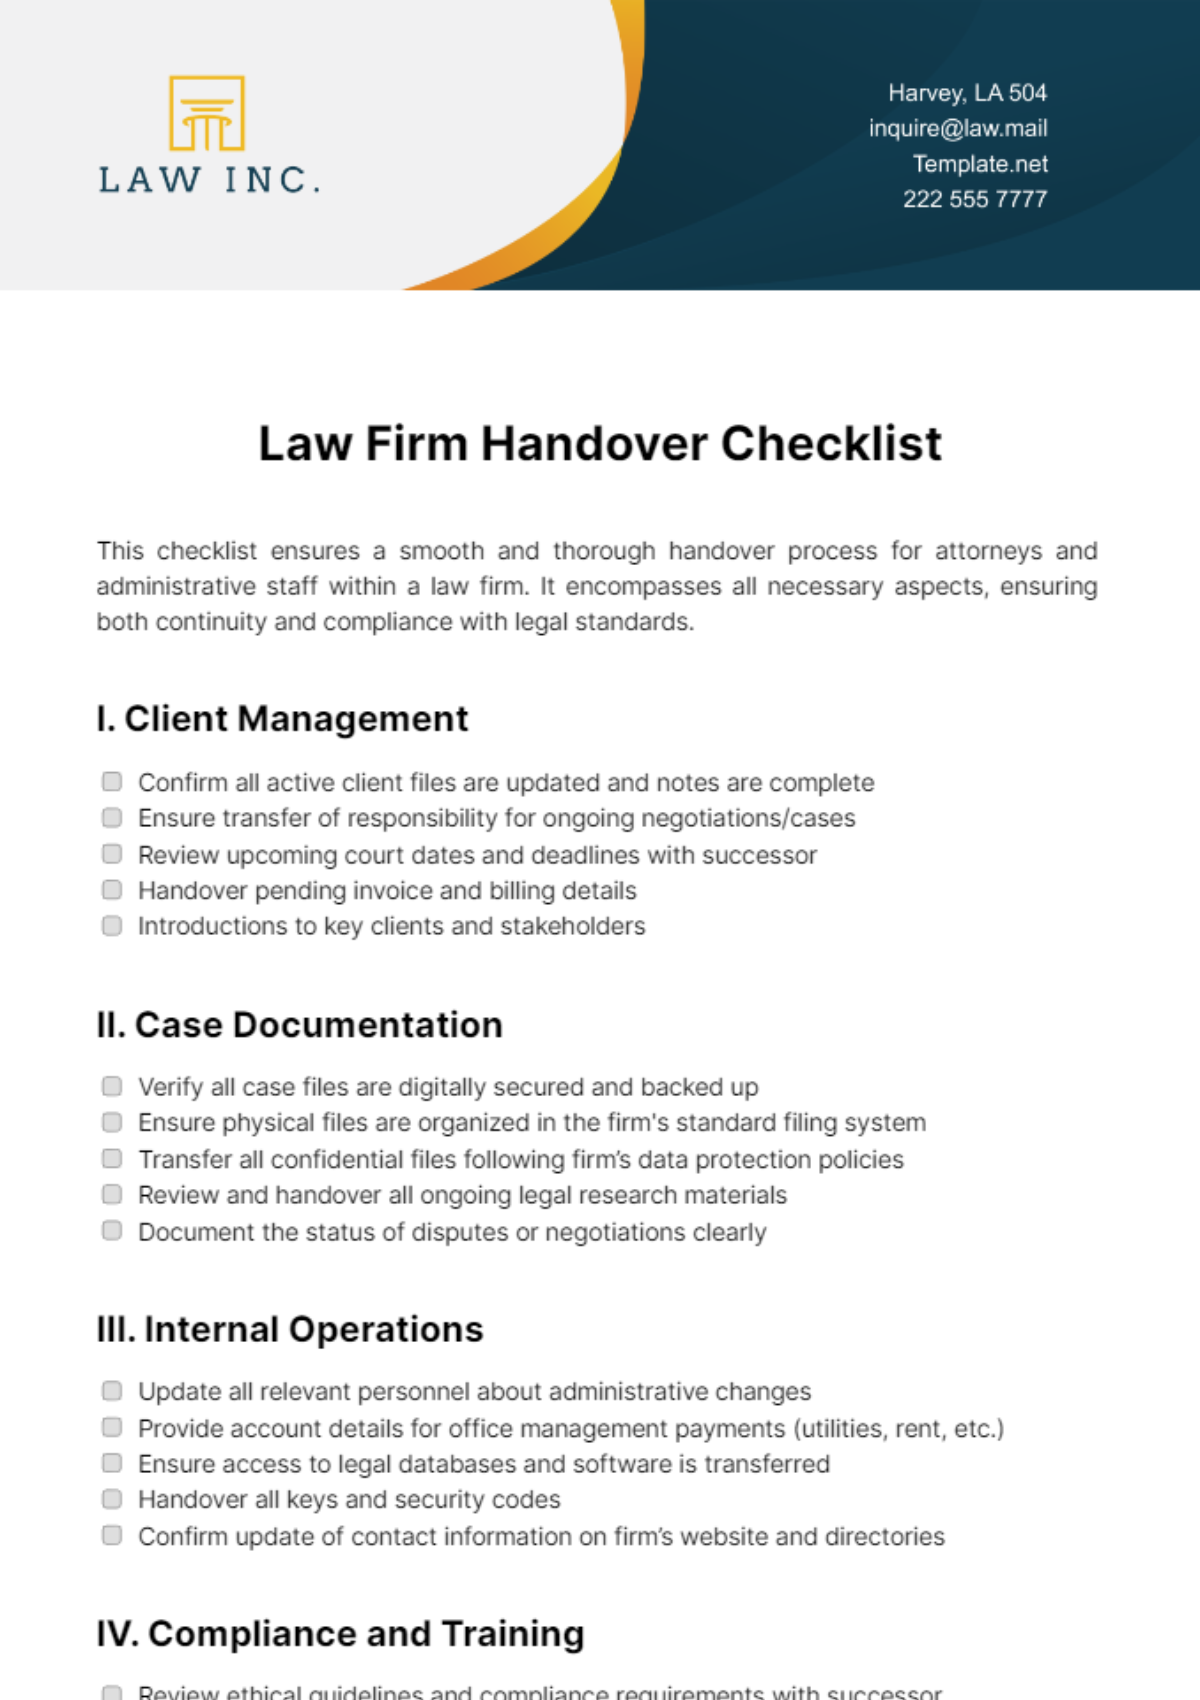 Law Firm Handover Checklist Template